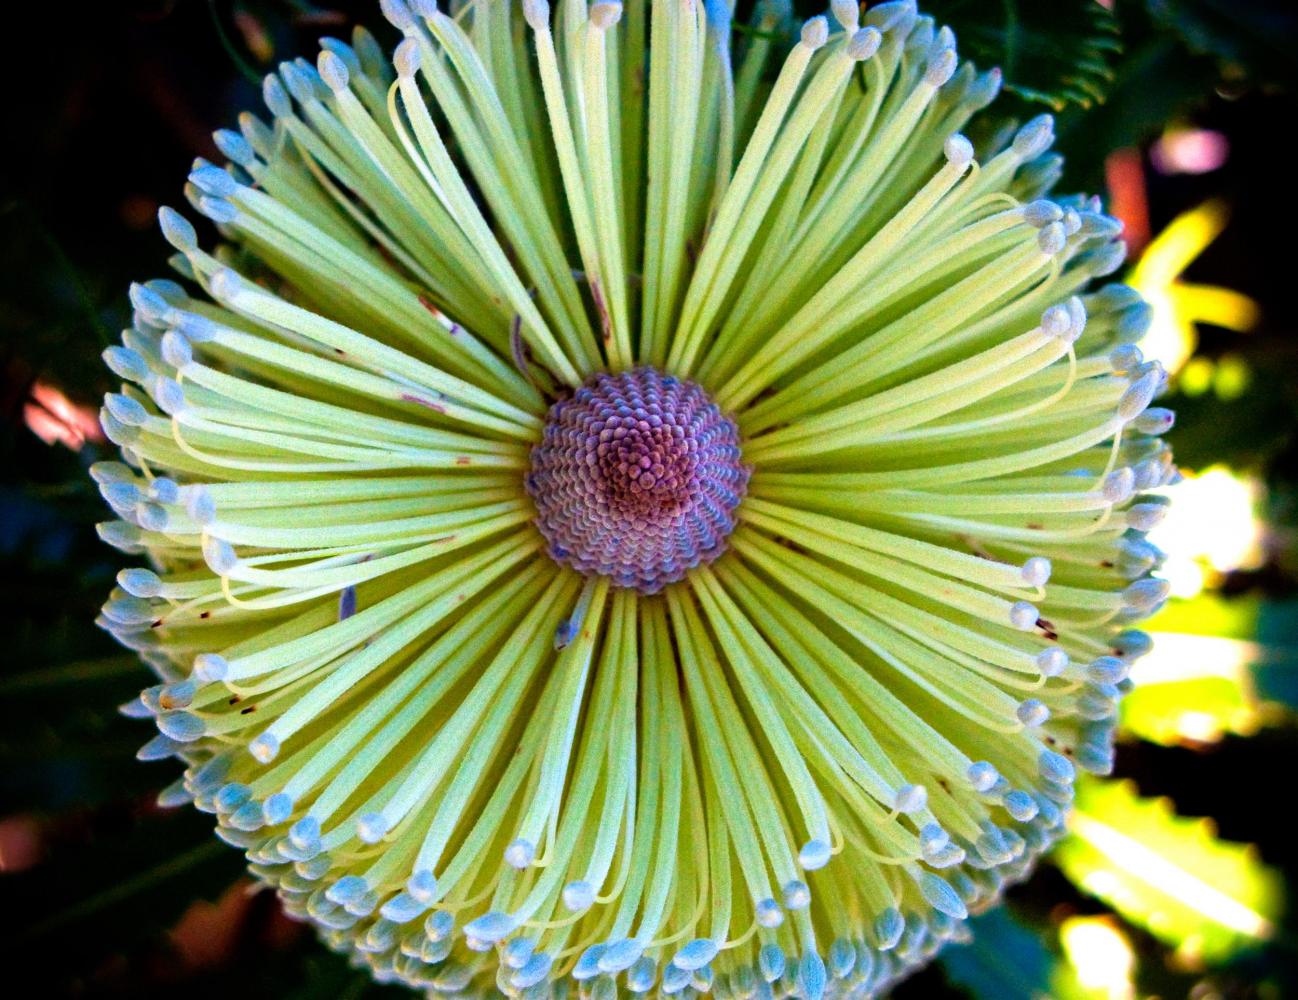 Banksia flower. Cooloola heath scrub.